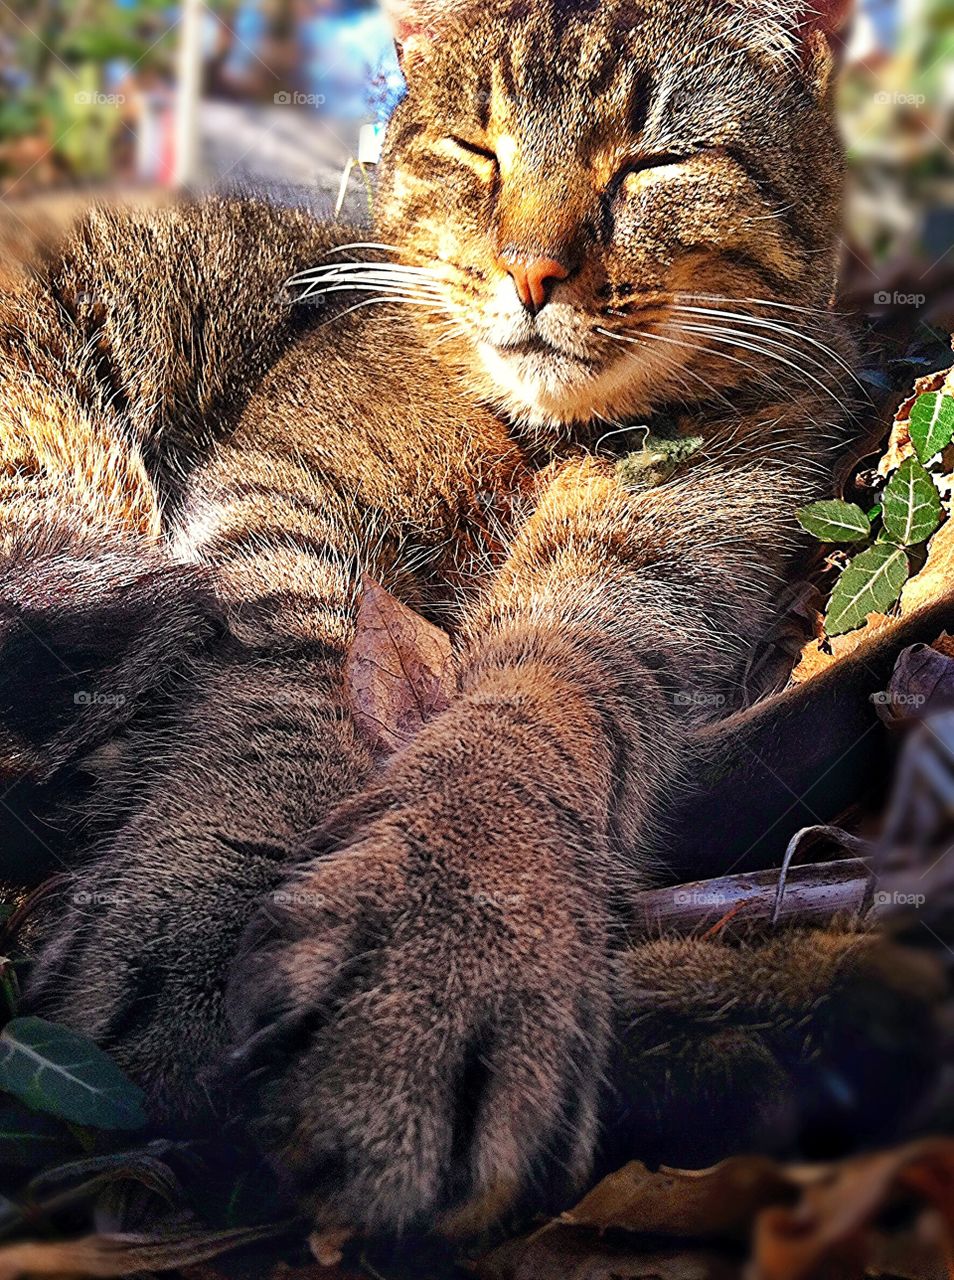 Lazy Sleeping Cat in the Sun